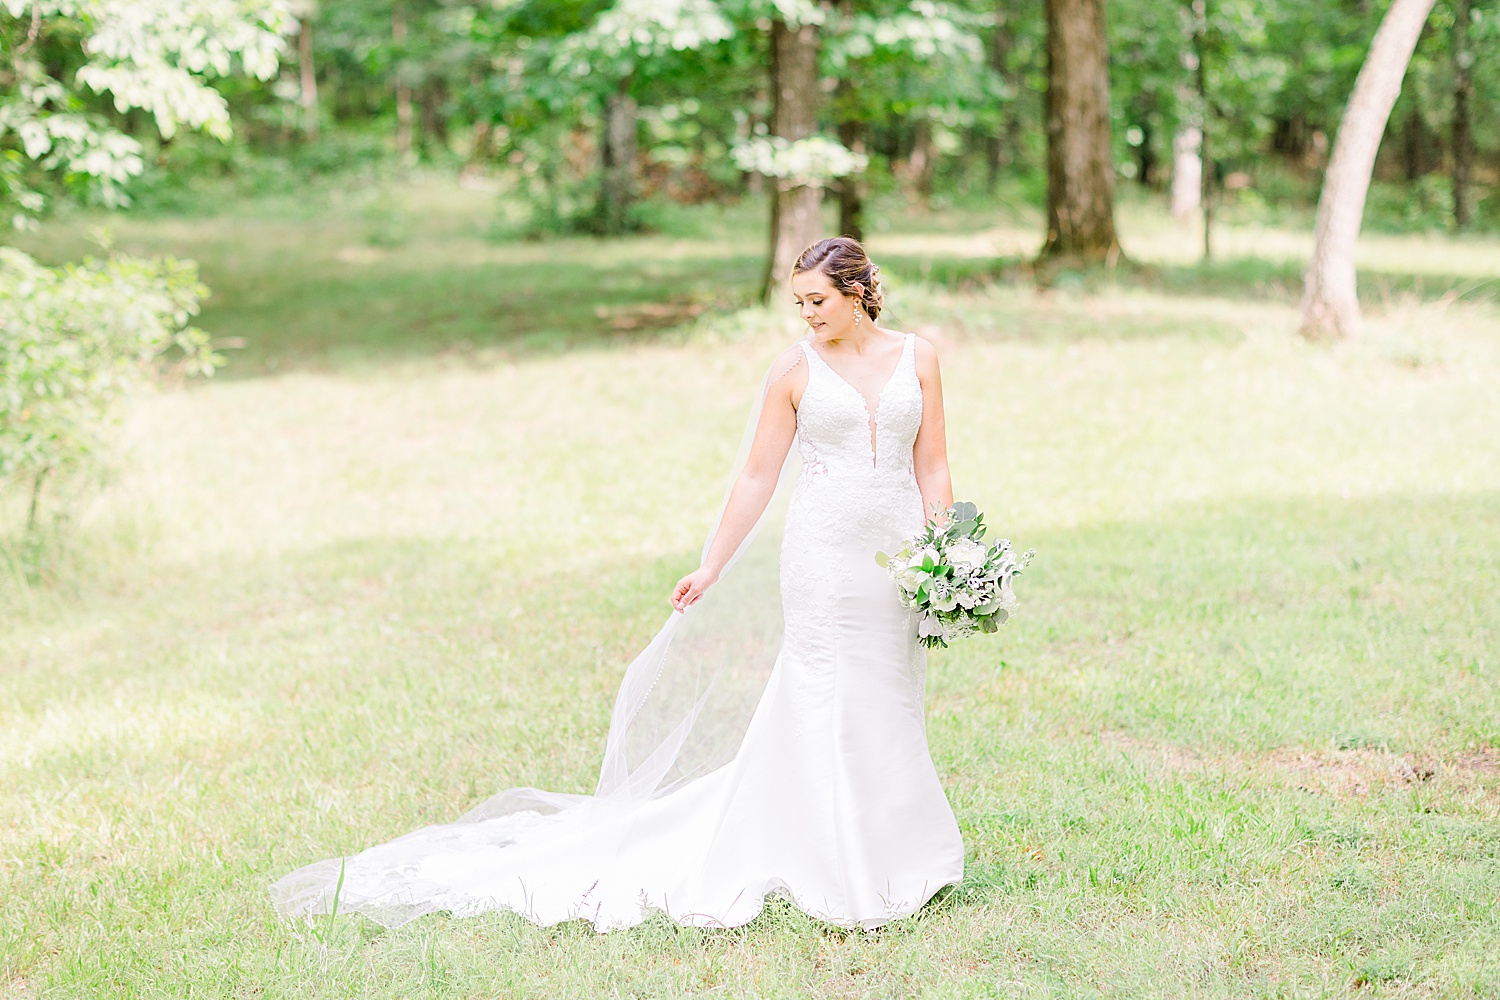 Bridal details at Belle Farms Summer Wedding in Alabama